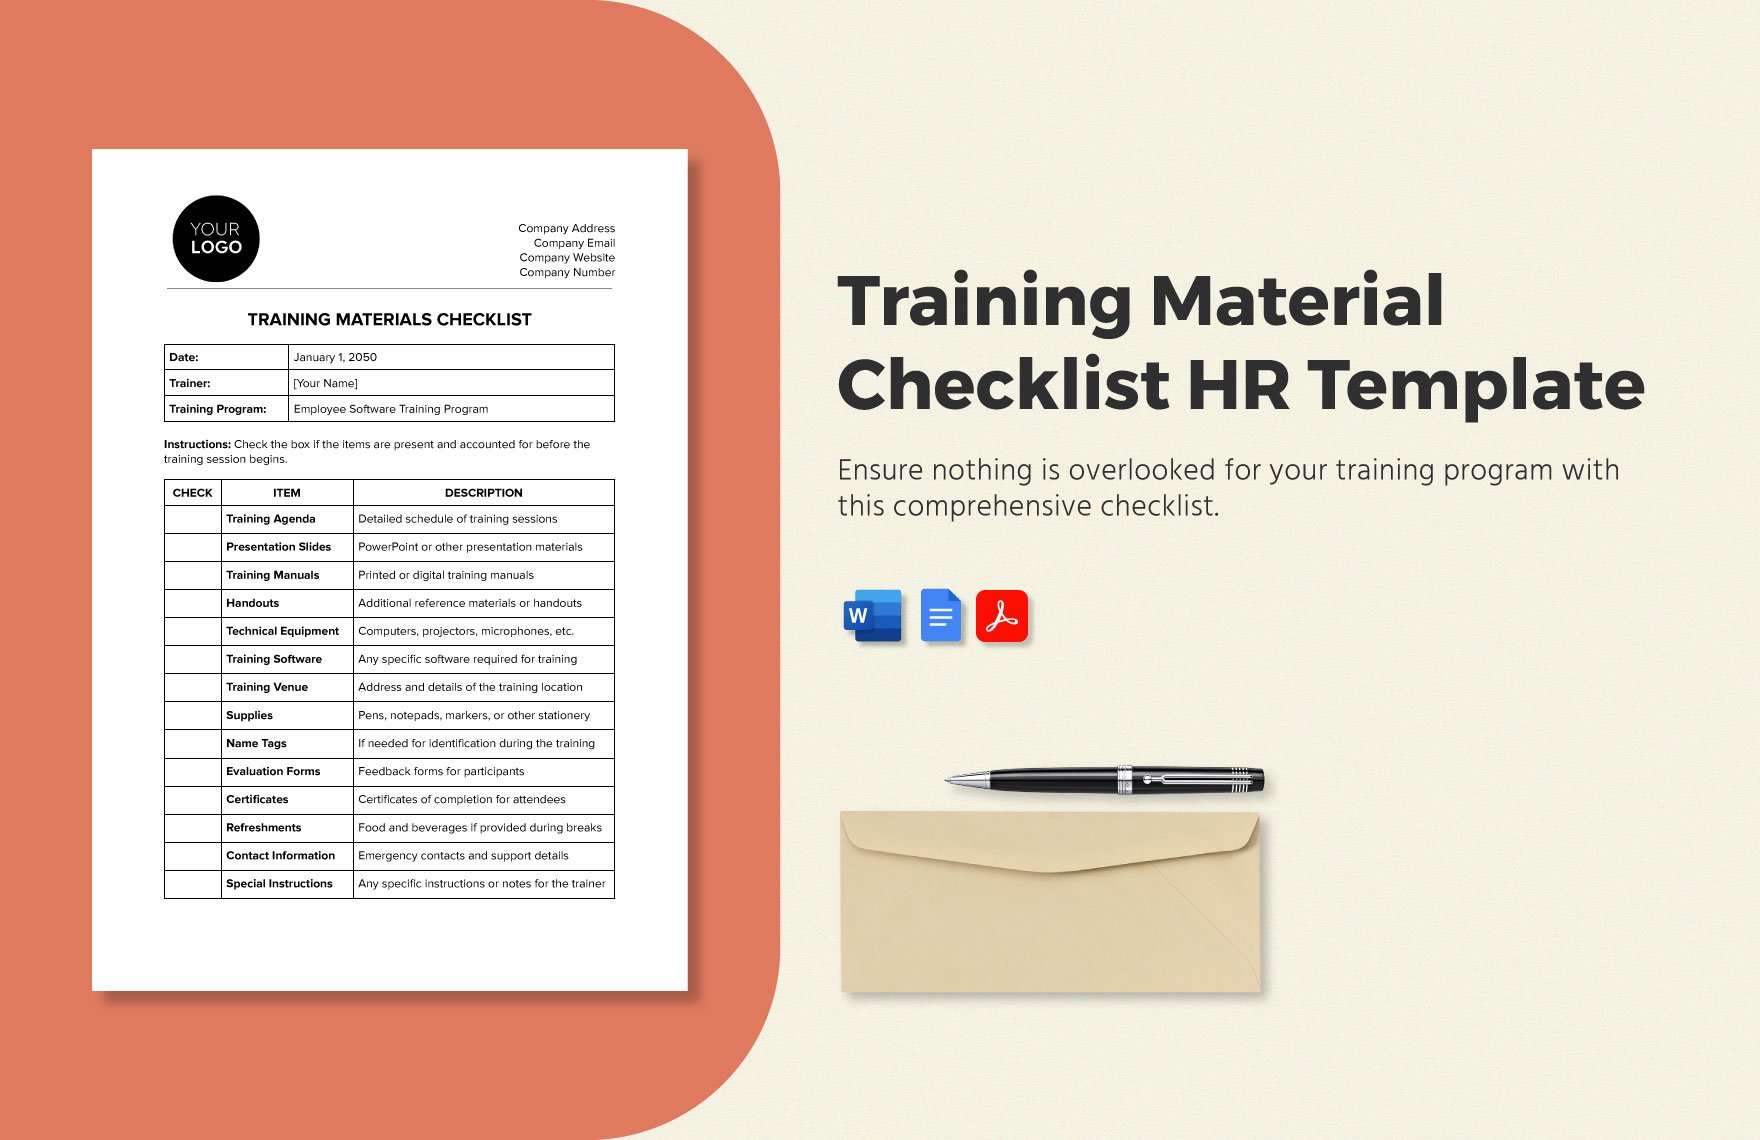 Training Material Checklist HR Template